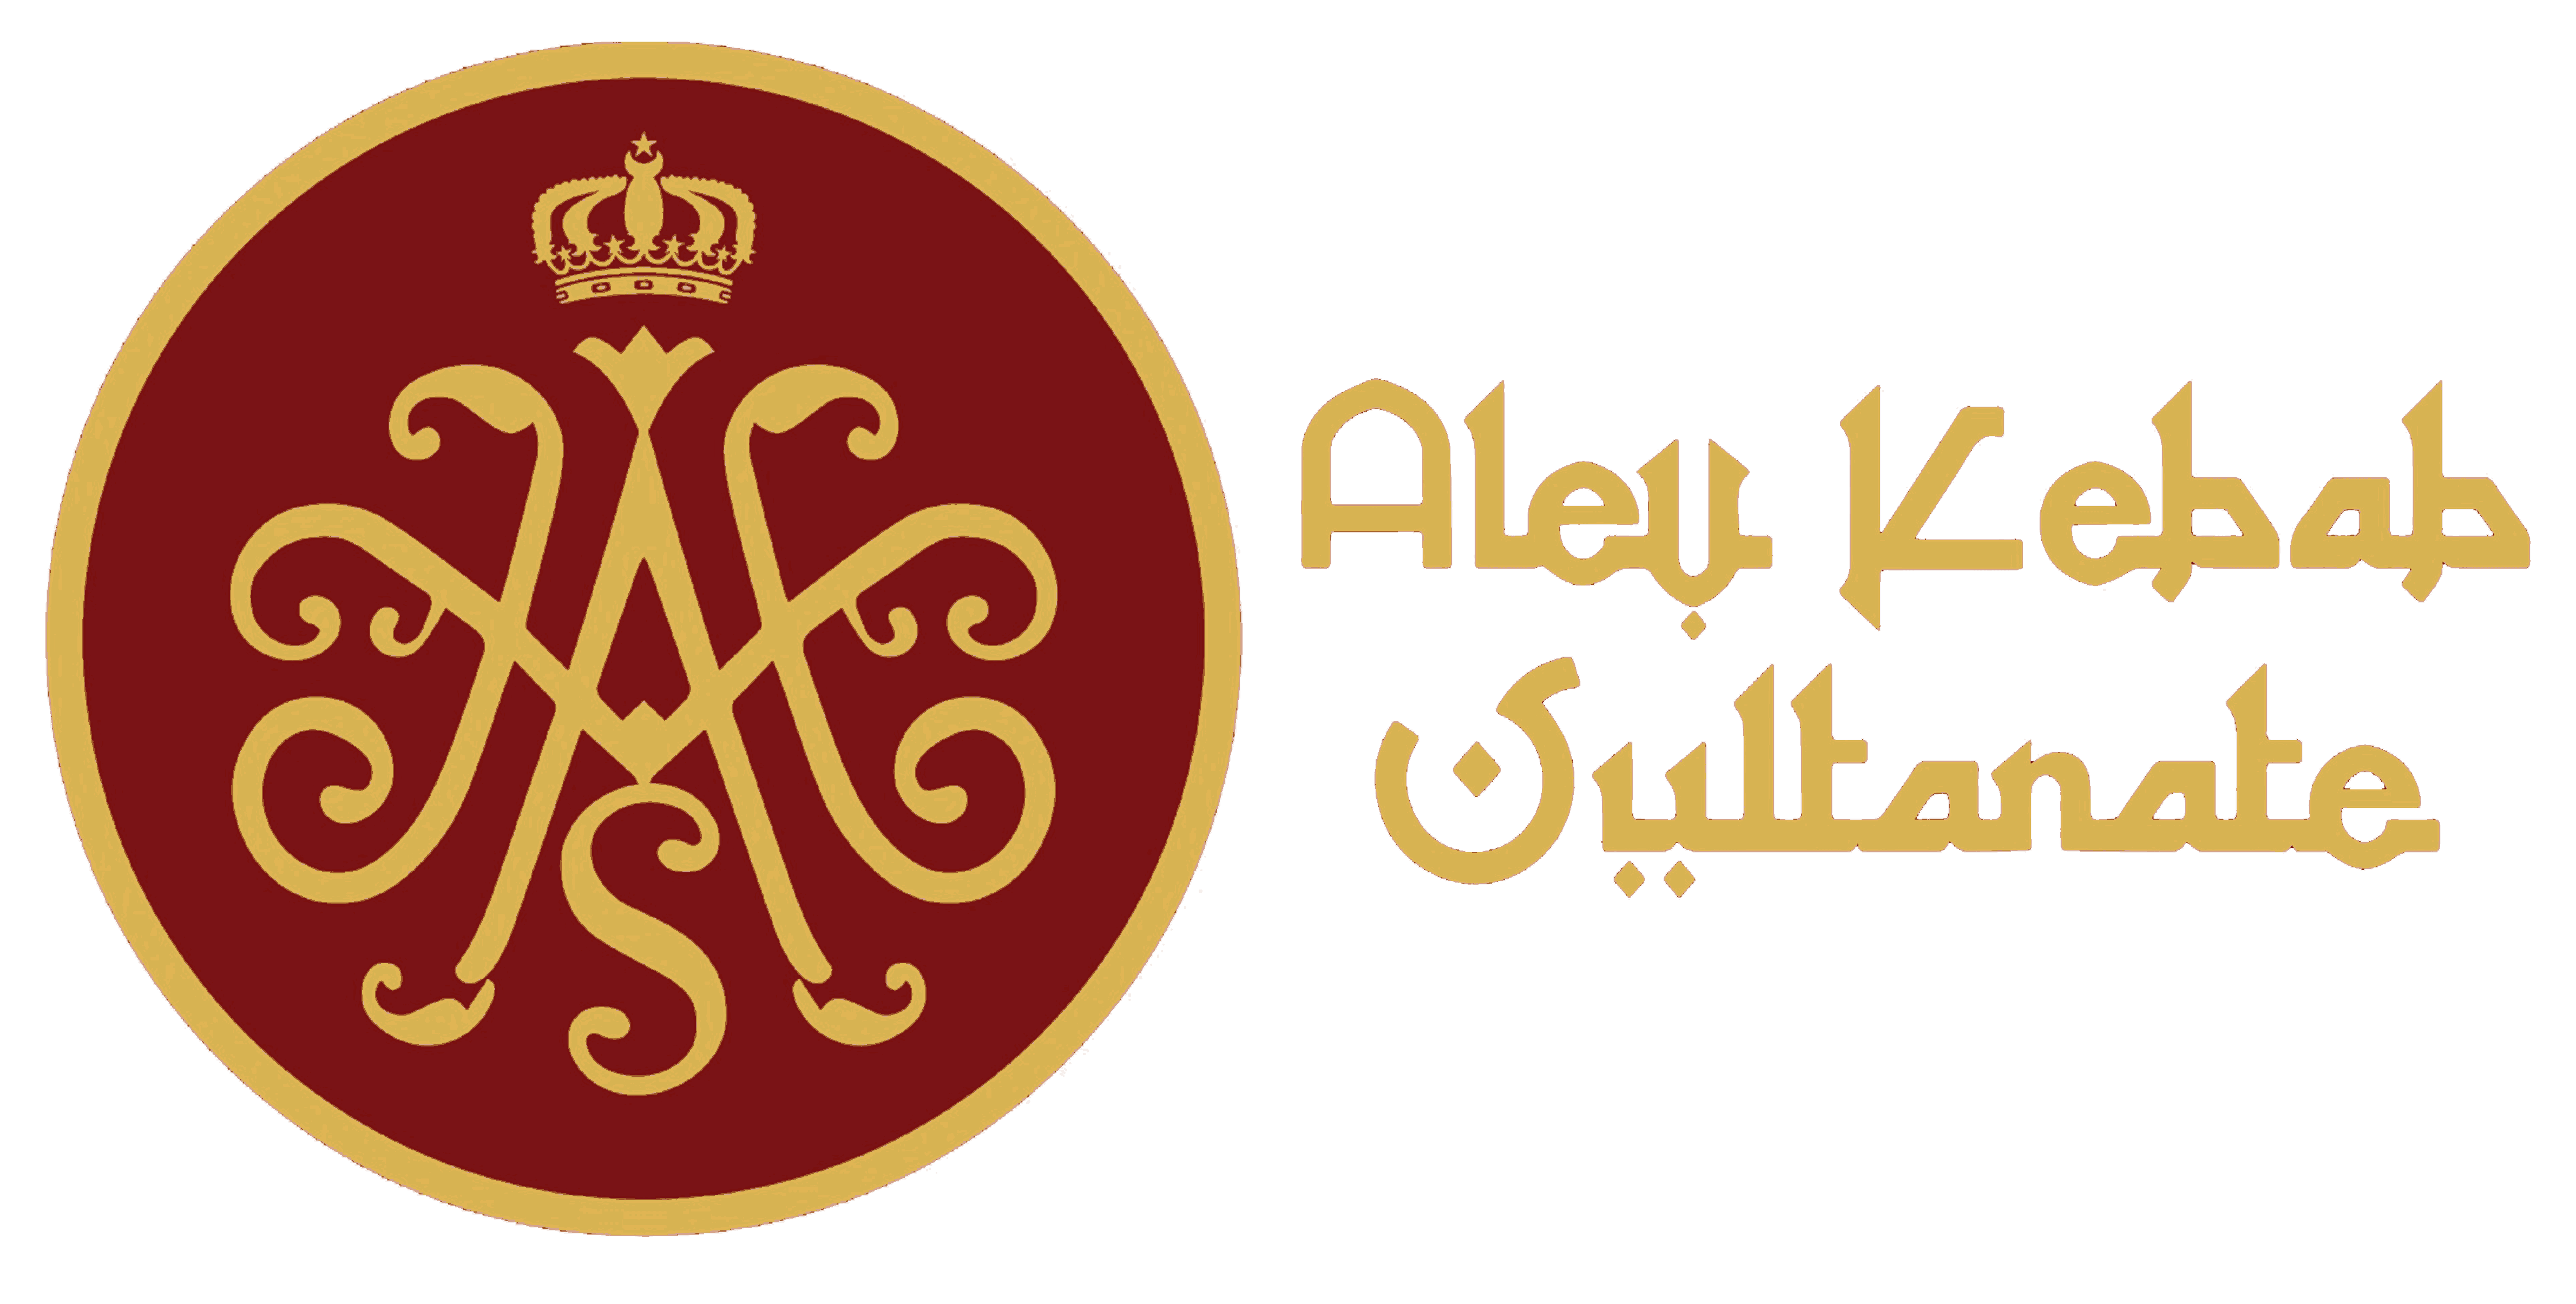 Alev Kebab Sultanate